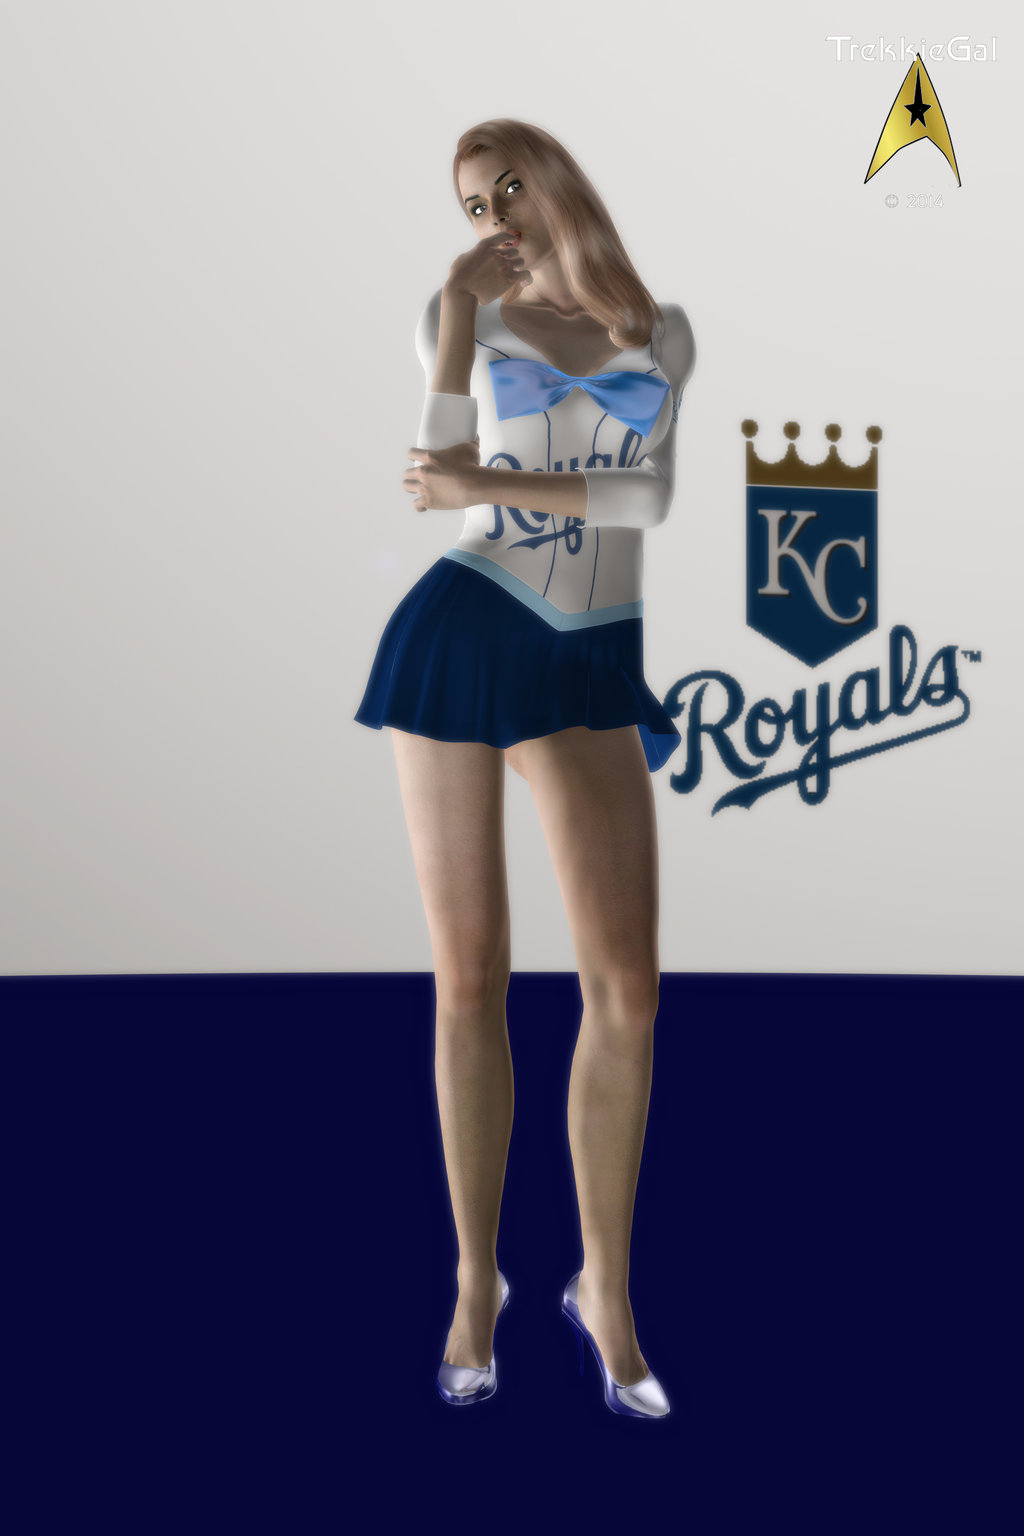 2014 Kansas City Royals by TrekkieGal on